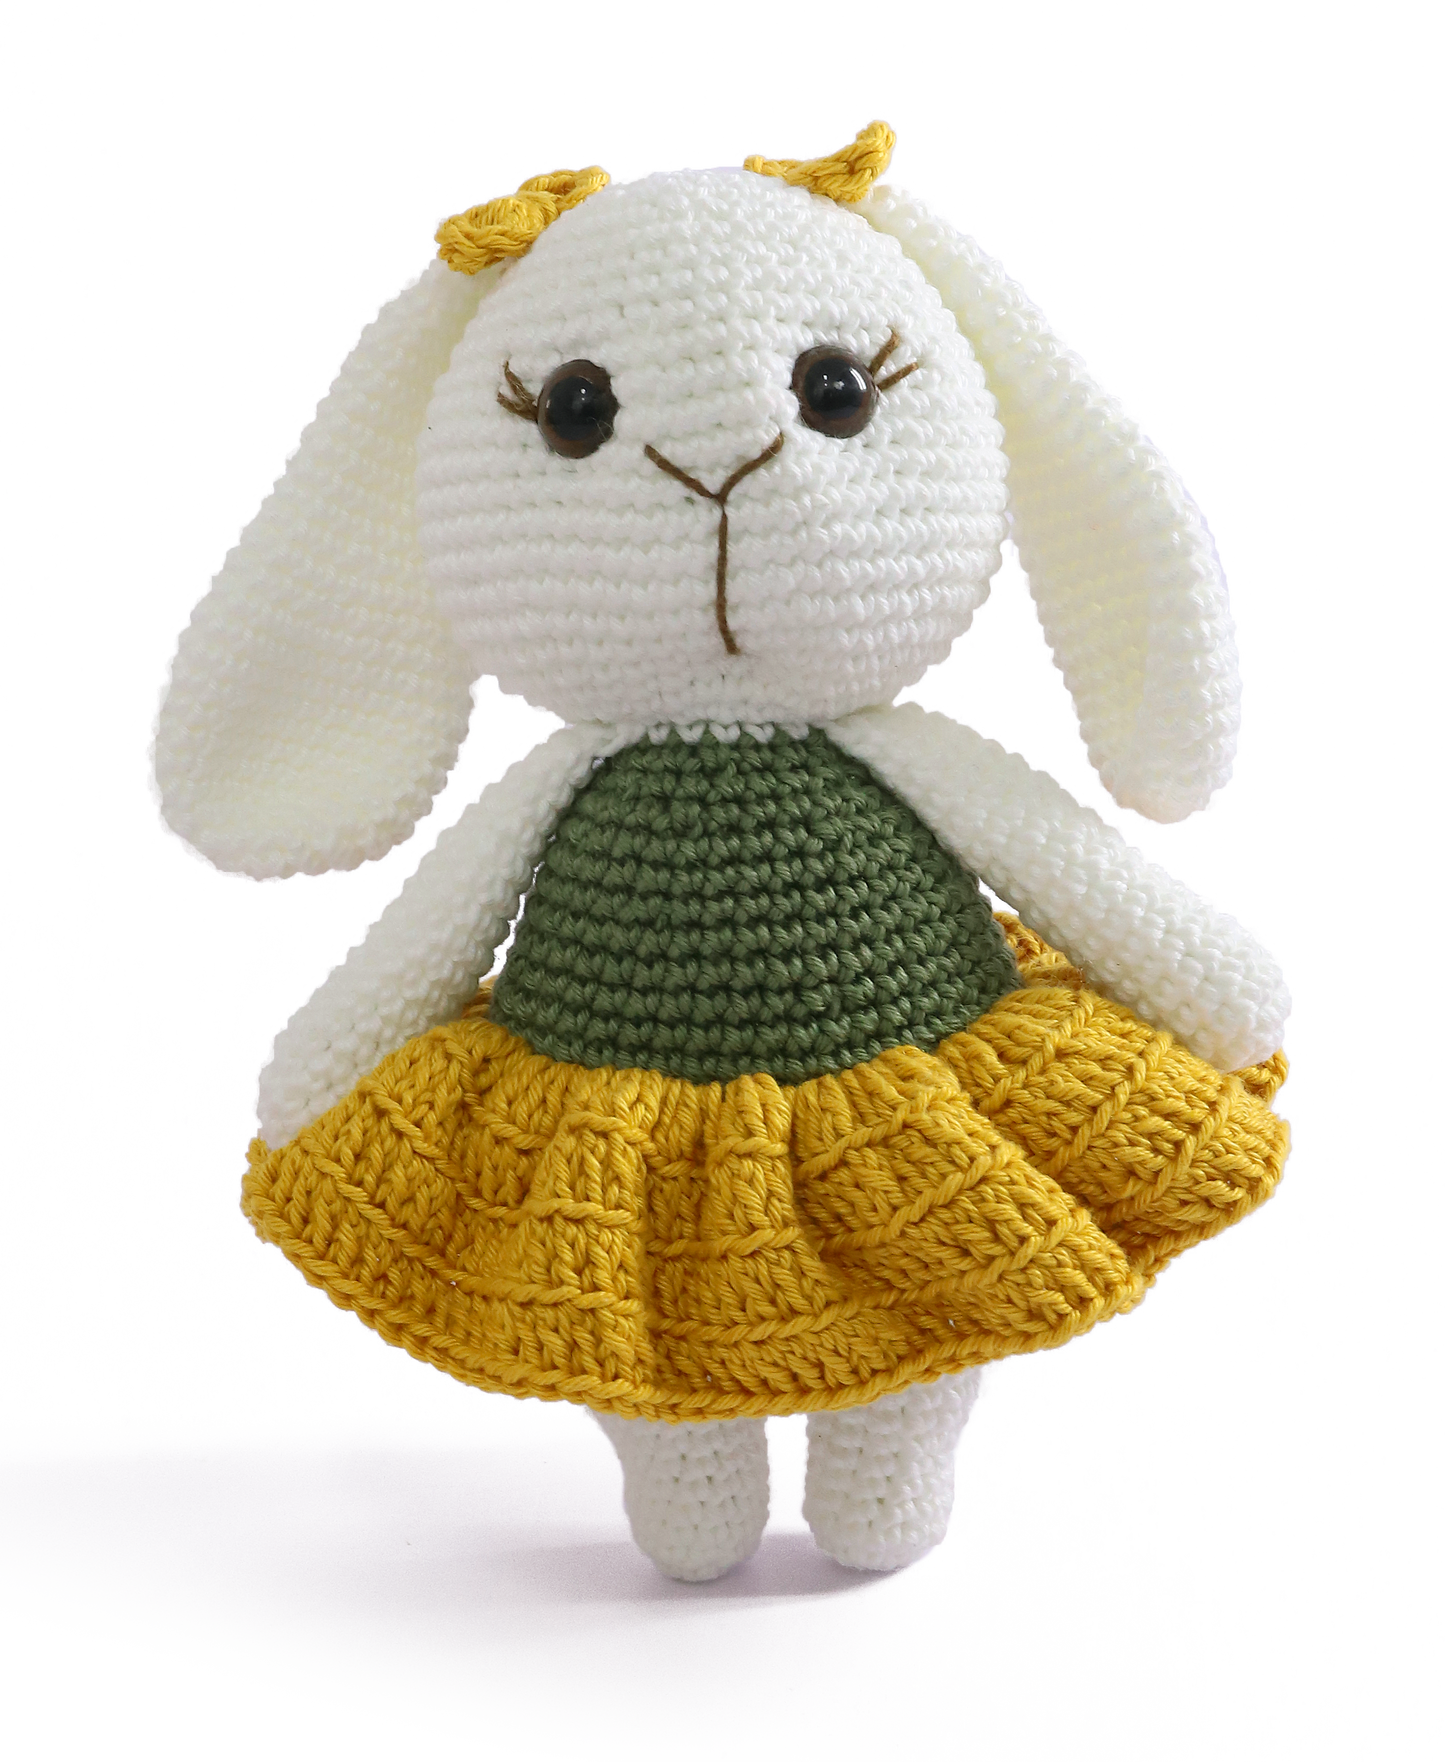 Crochet Amigurumi Animal Kits | Circulo